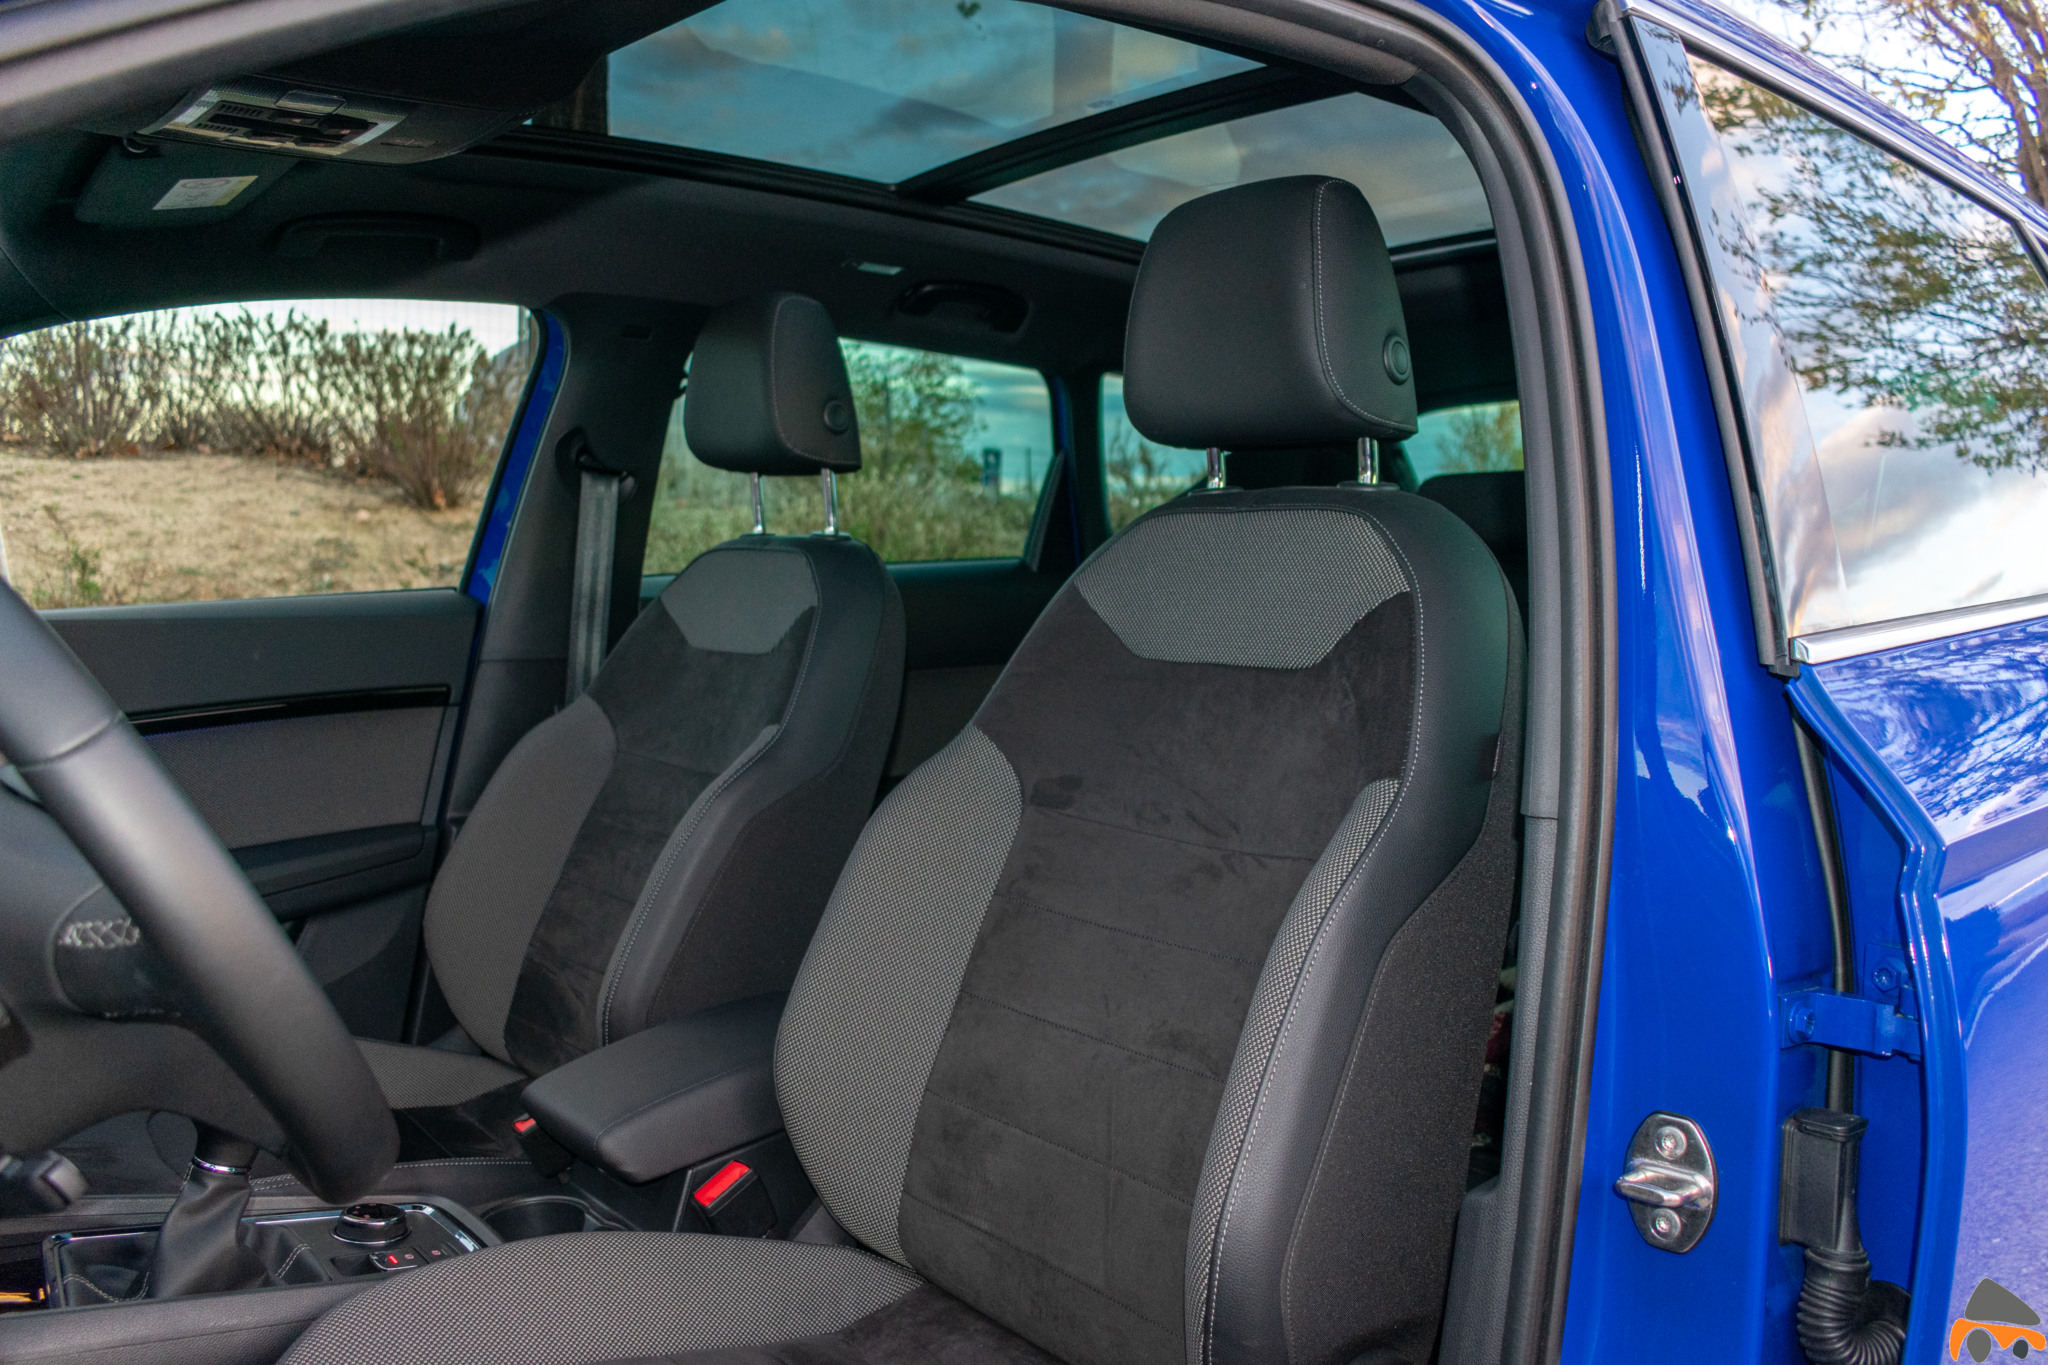 Asientos delanteros Seat Ateca scaled - Seat Ateca Xcellence 2.0 TDI 150 CV: Un León con esteroides